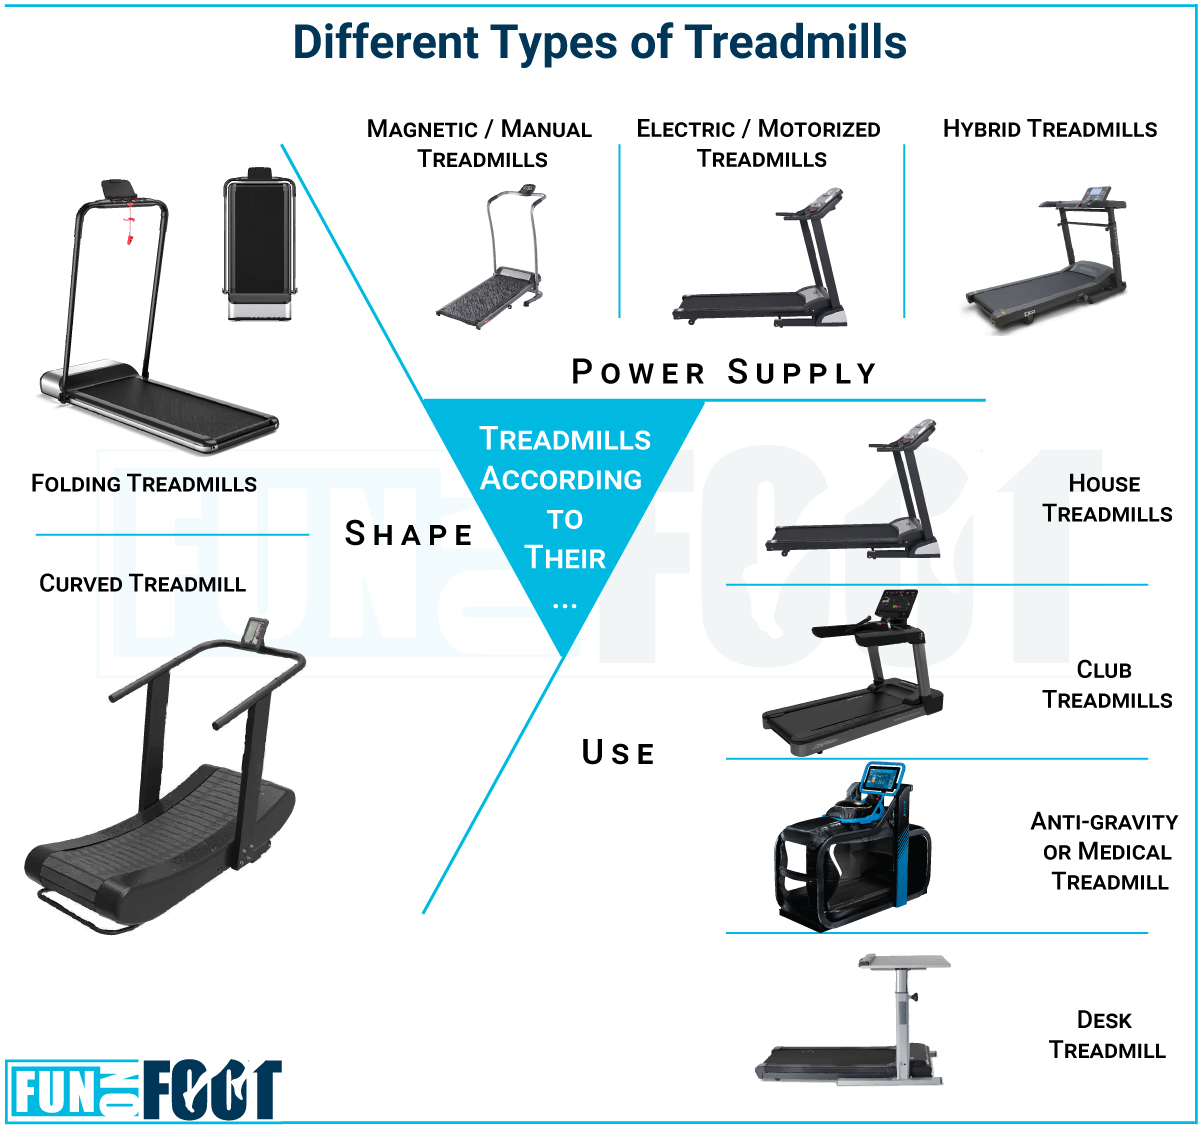 Different Types of Treadmills